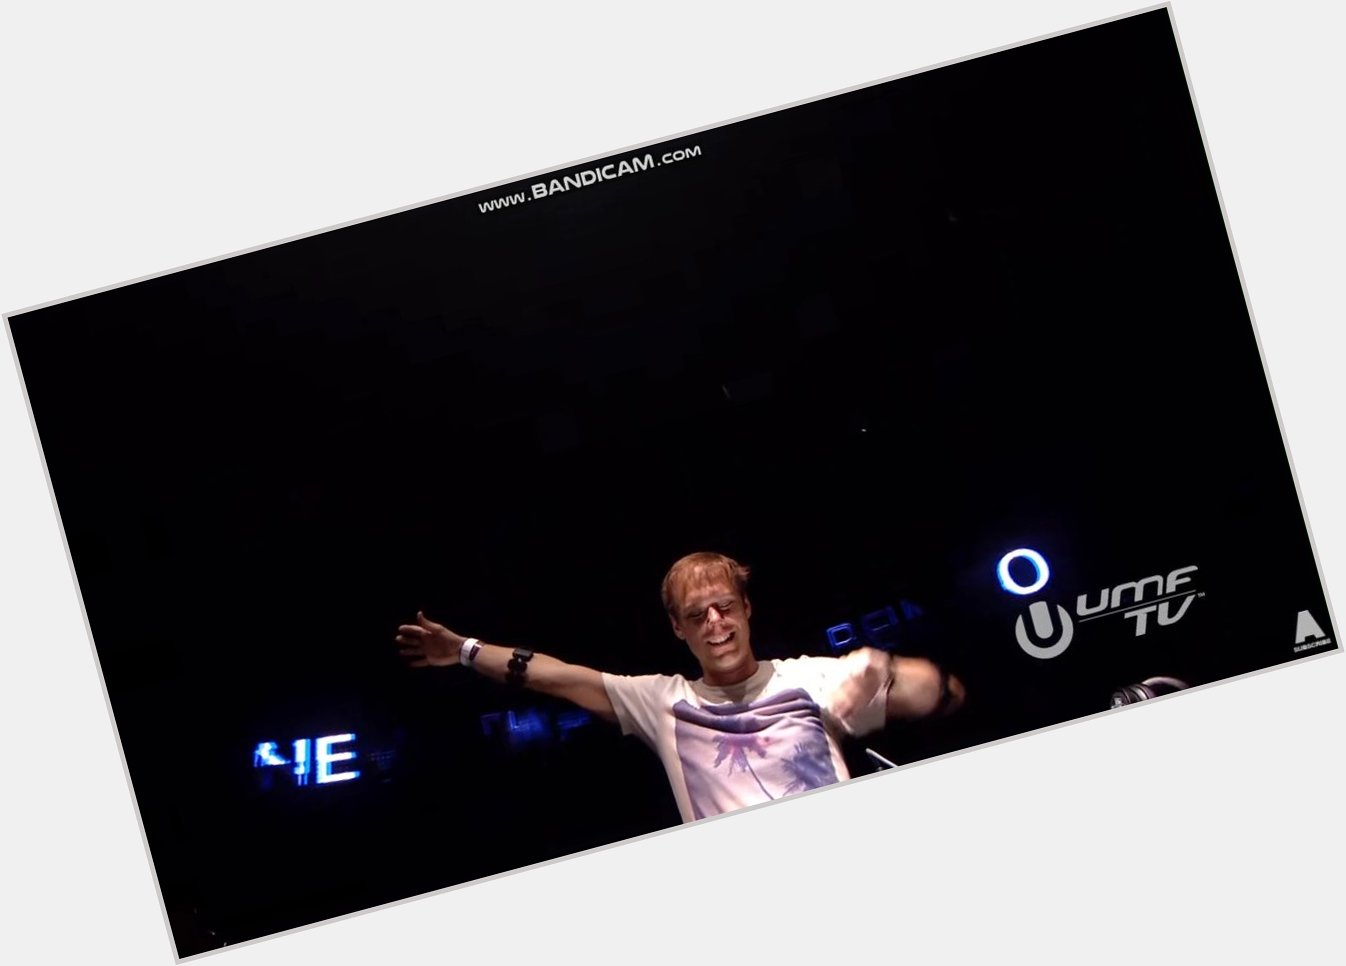 Armin Van Buuren - safe inside you. Ultra 2015. Merry Christmas and happy birthday to Armin  